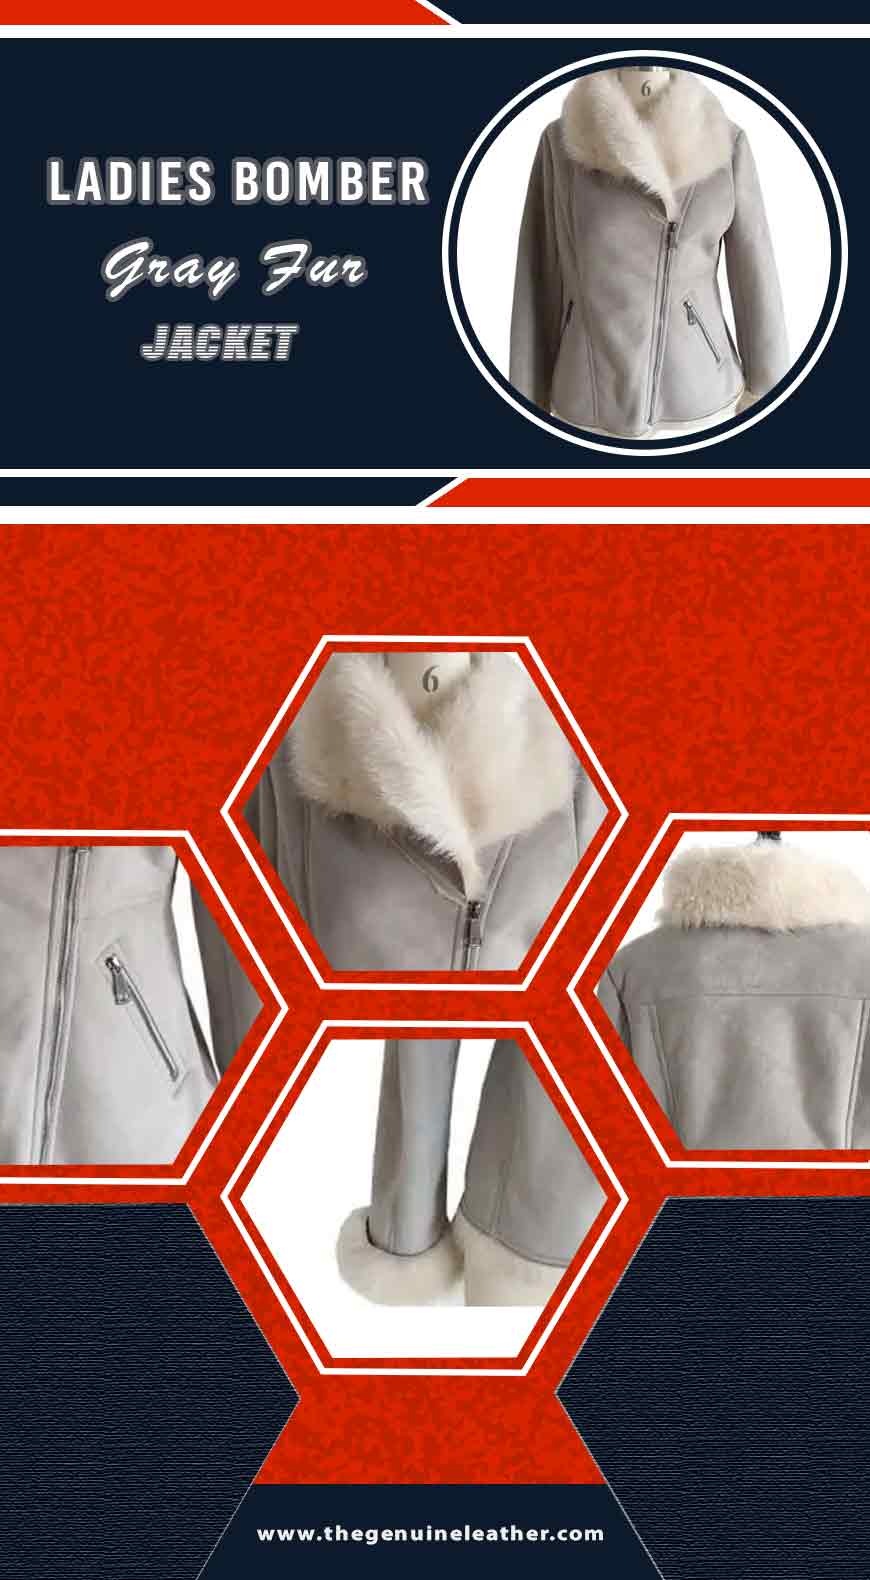 Ladies Bomber Gray Fur Jacket info